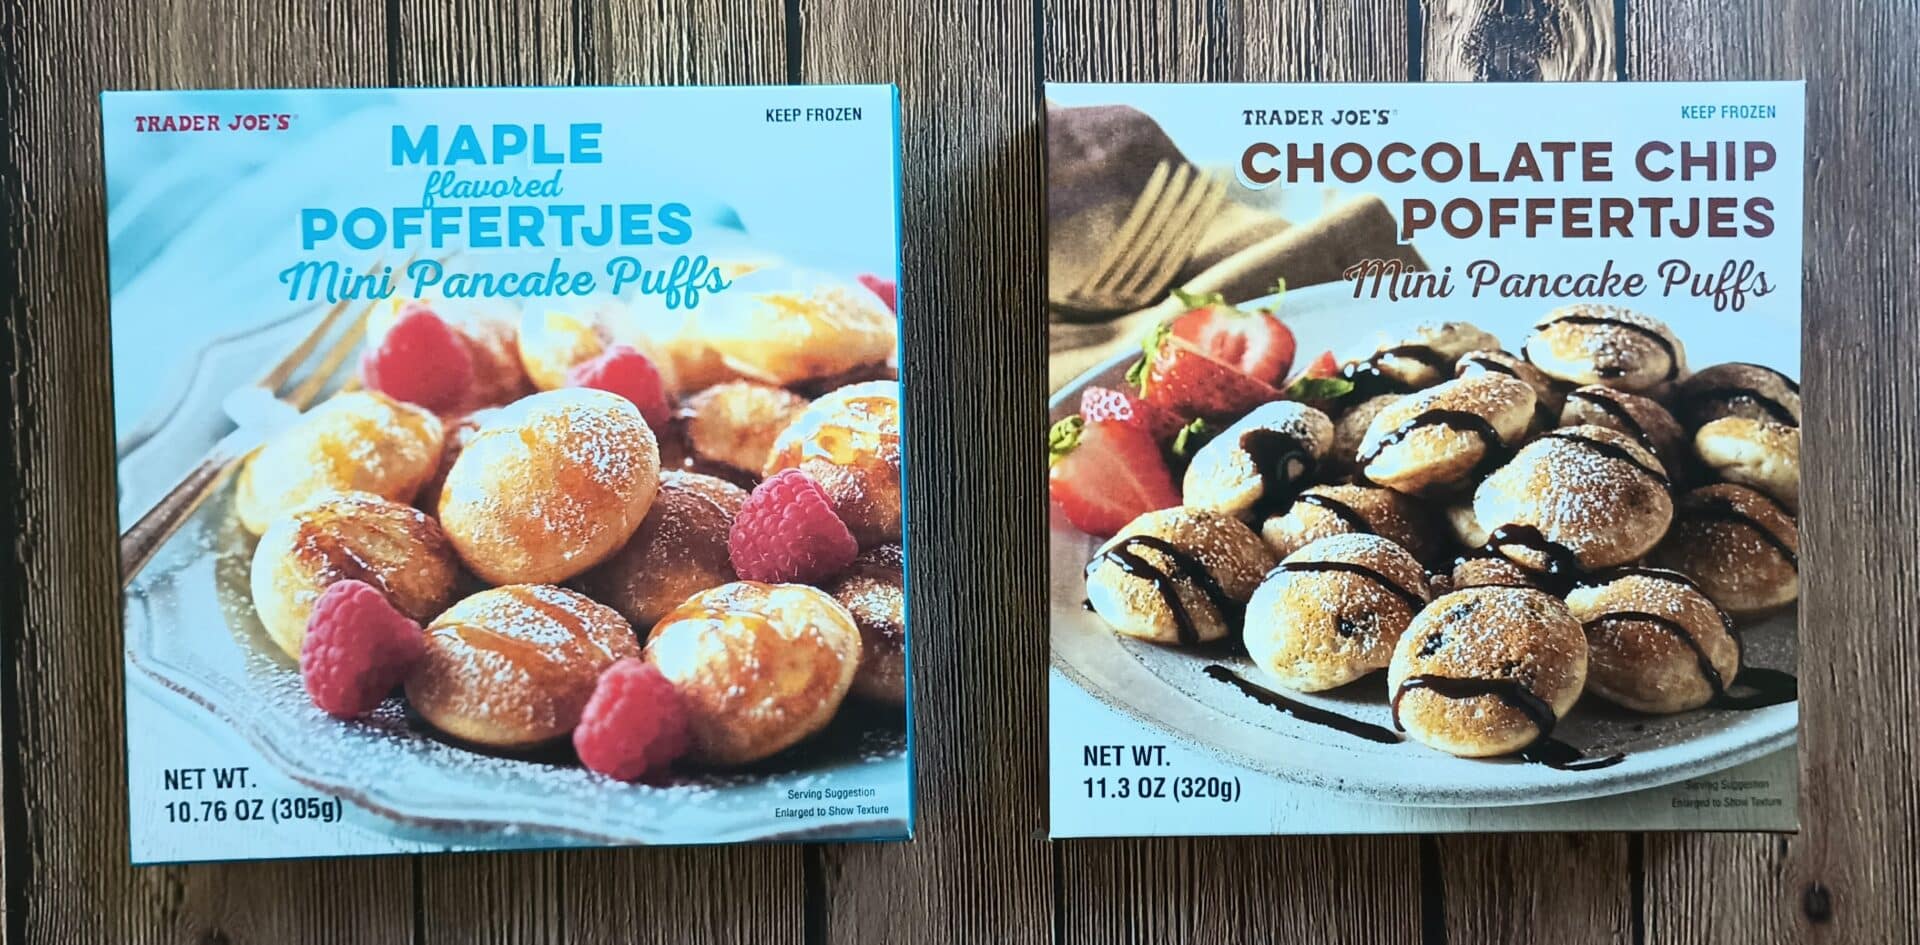 Trader Joe's Poffertjes Mini Pancake Puffs